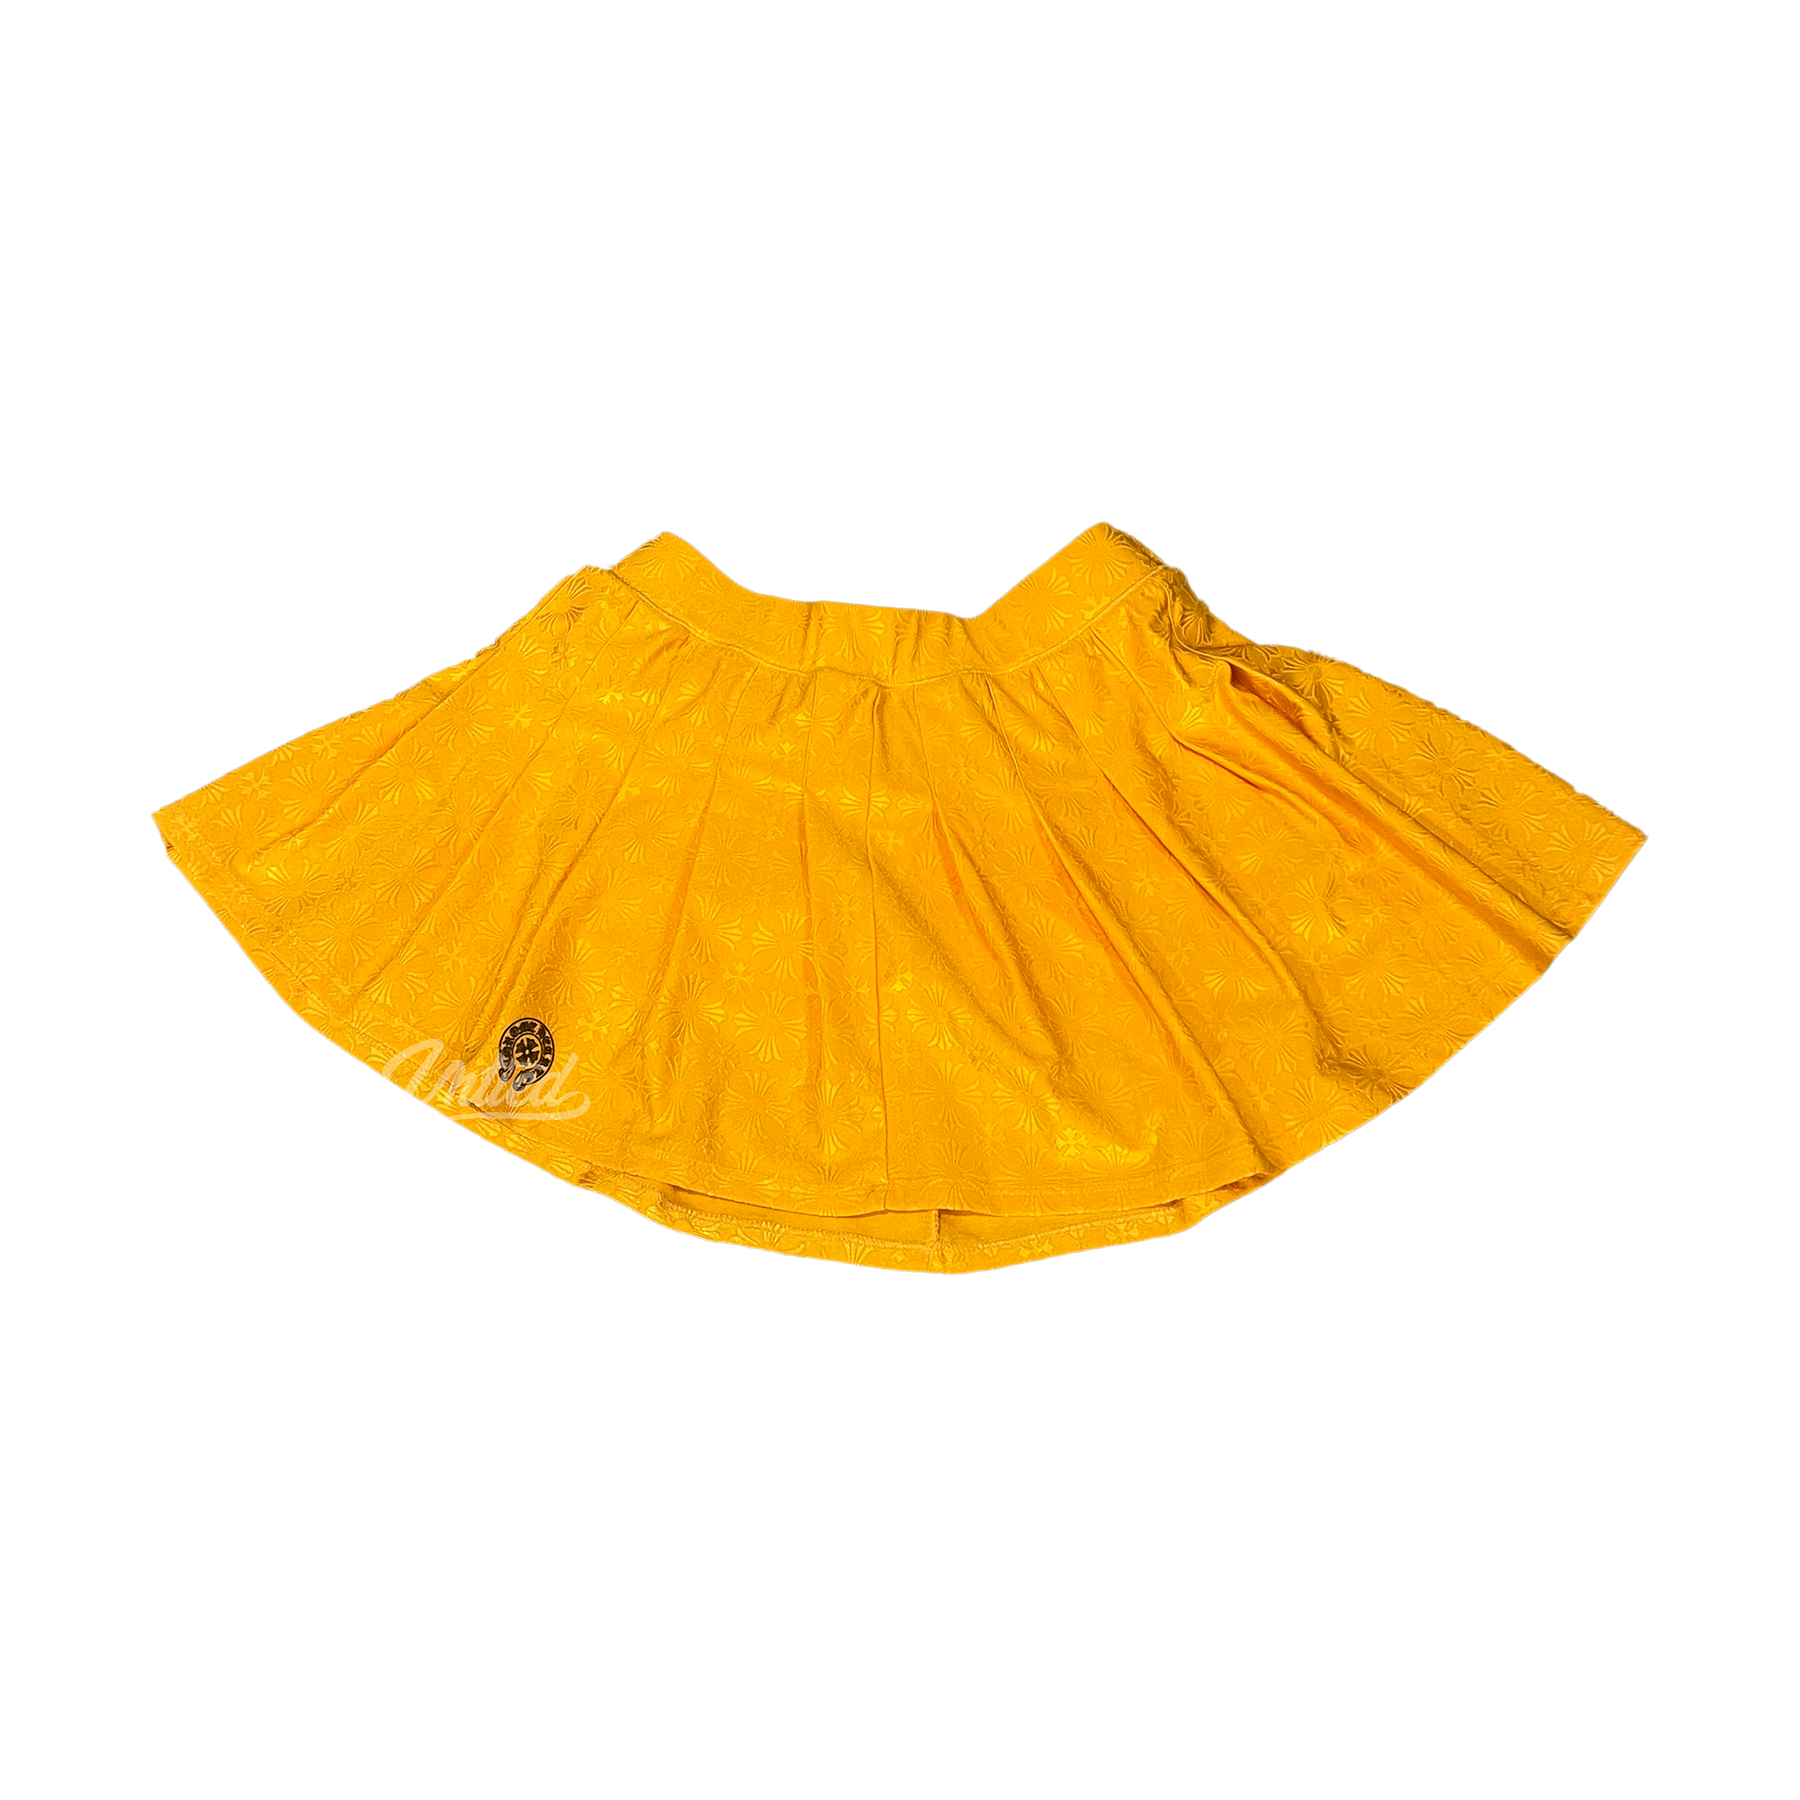 Chrome Hearts Motif Skirt "Gold"